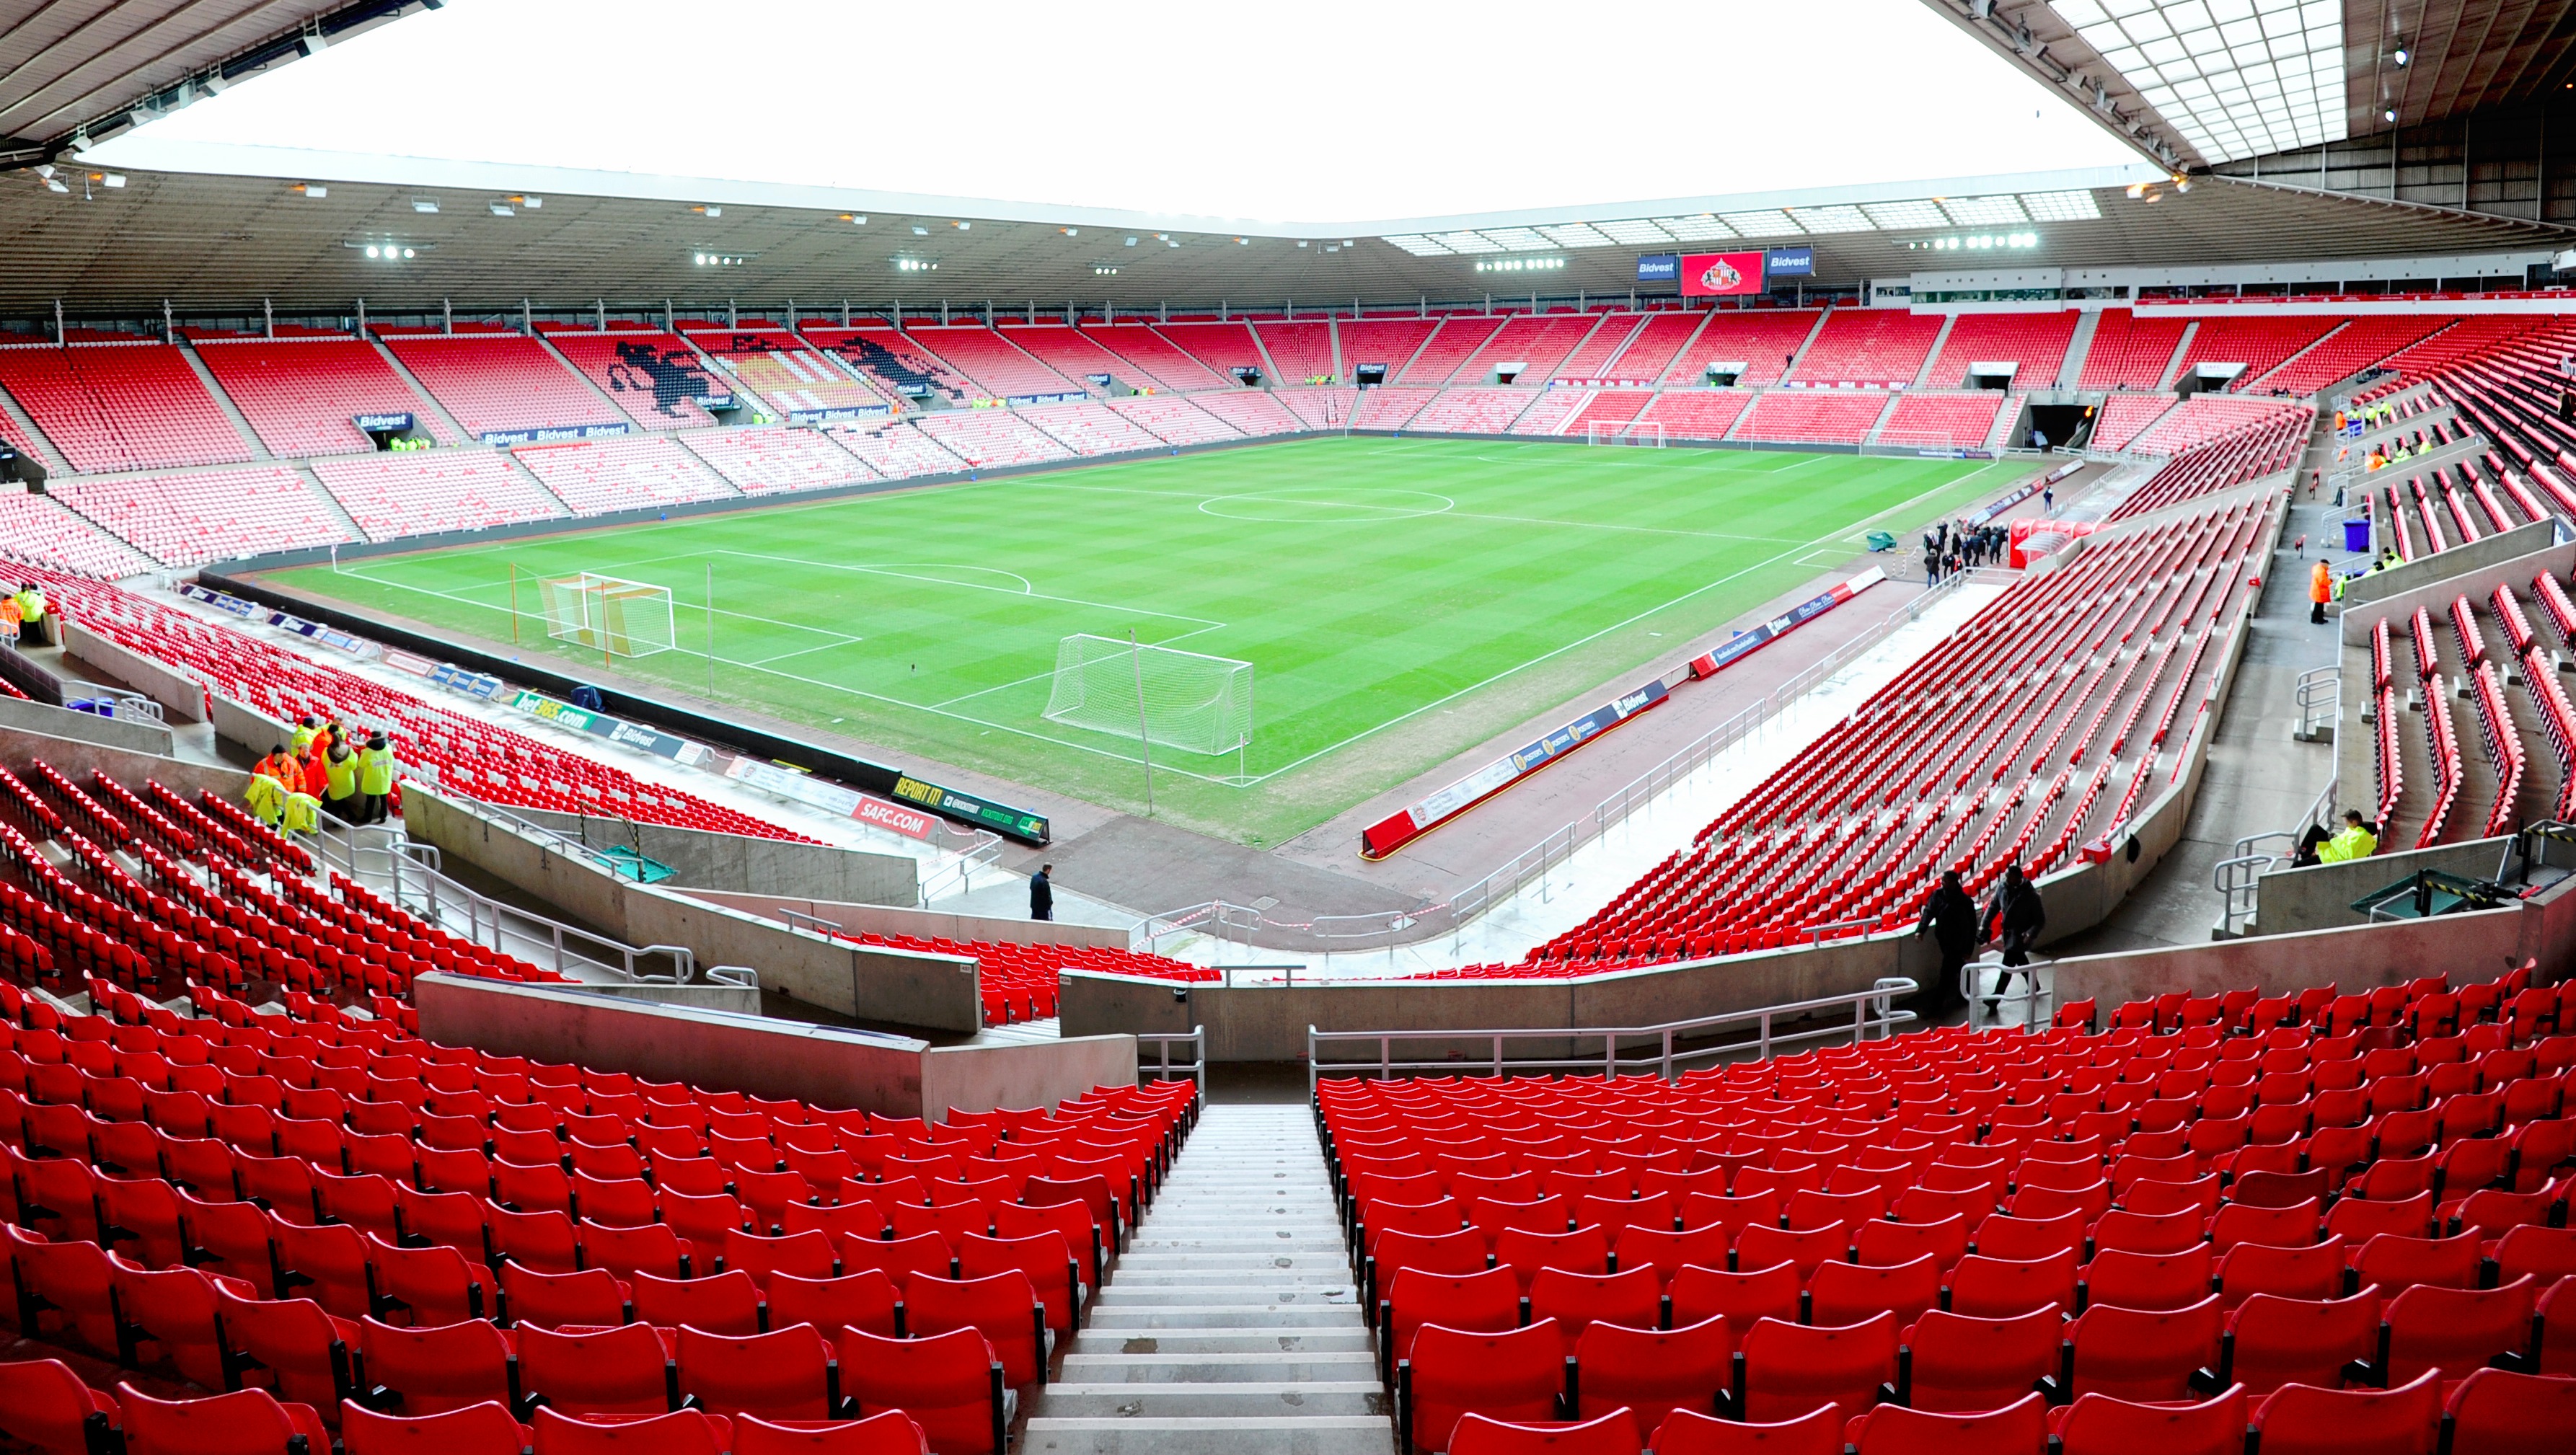 Sunderland away travel and match ticket details